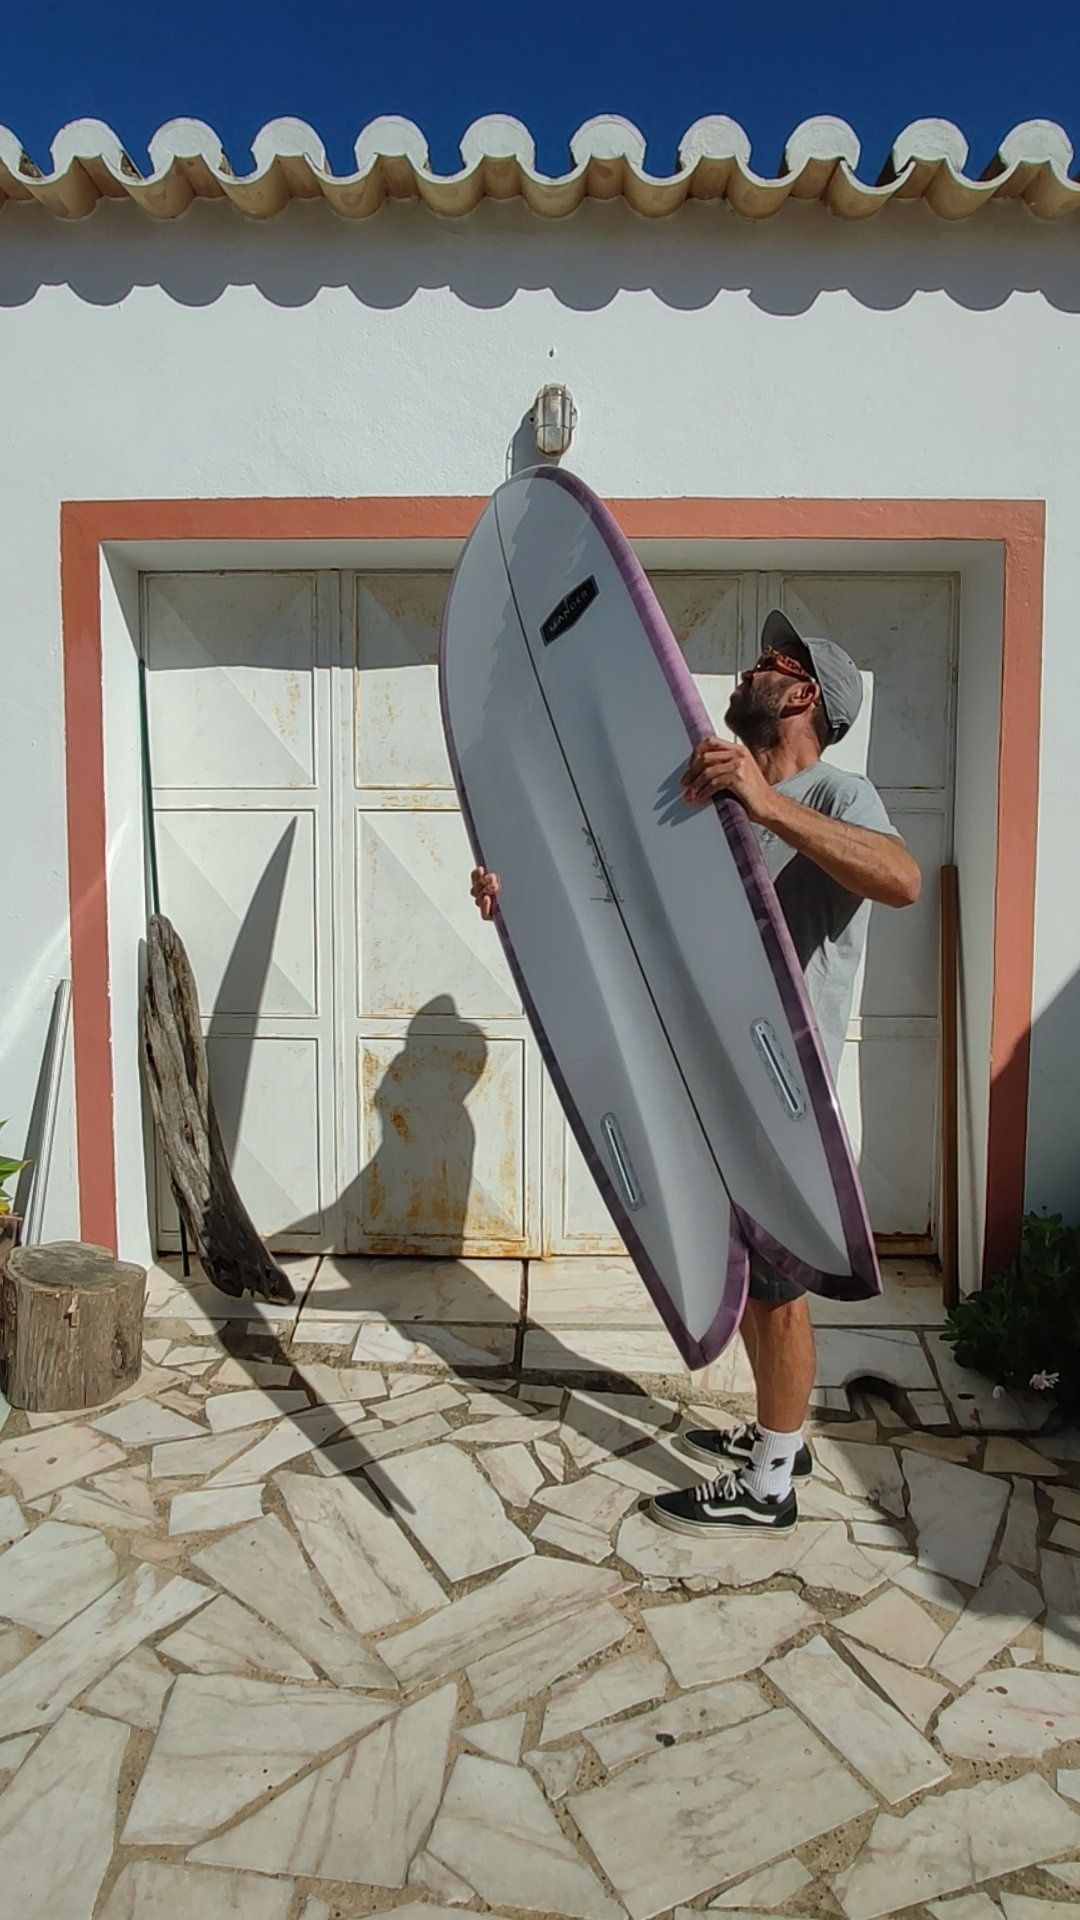 6'0" Twin fin surfboard